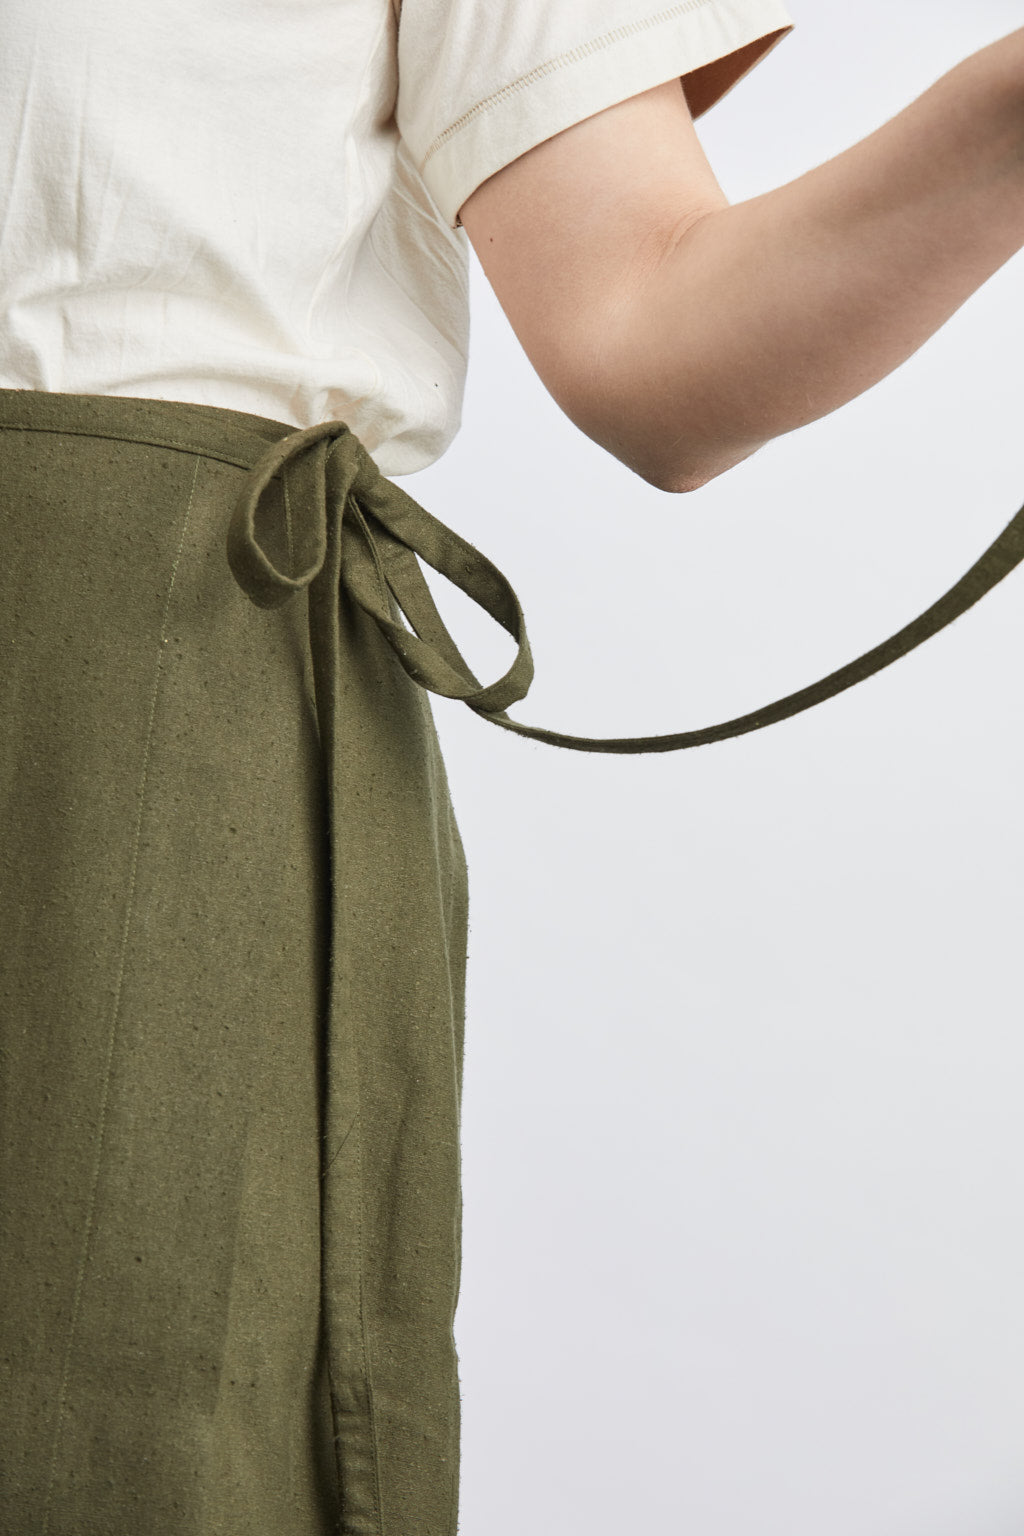 Wrap Skirt in Olive Heather by Nicholas K – Idlewild